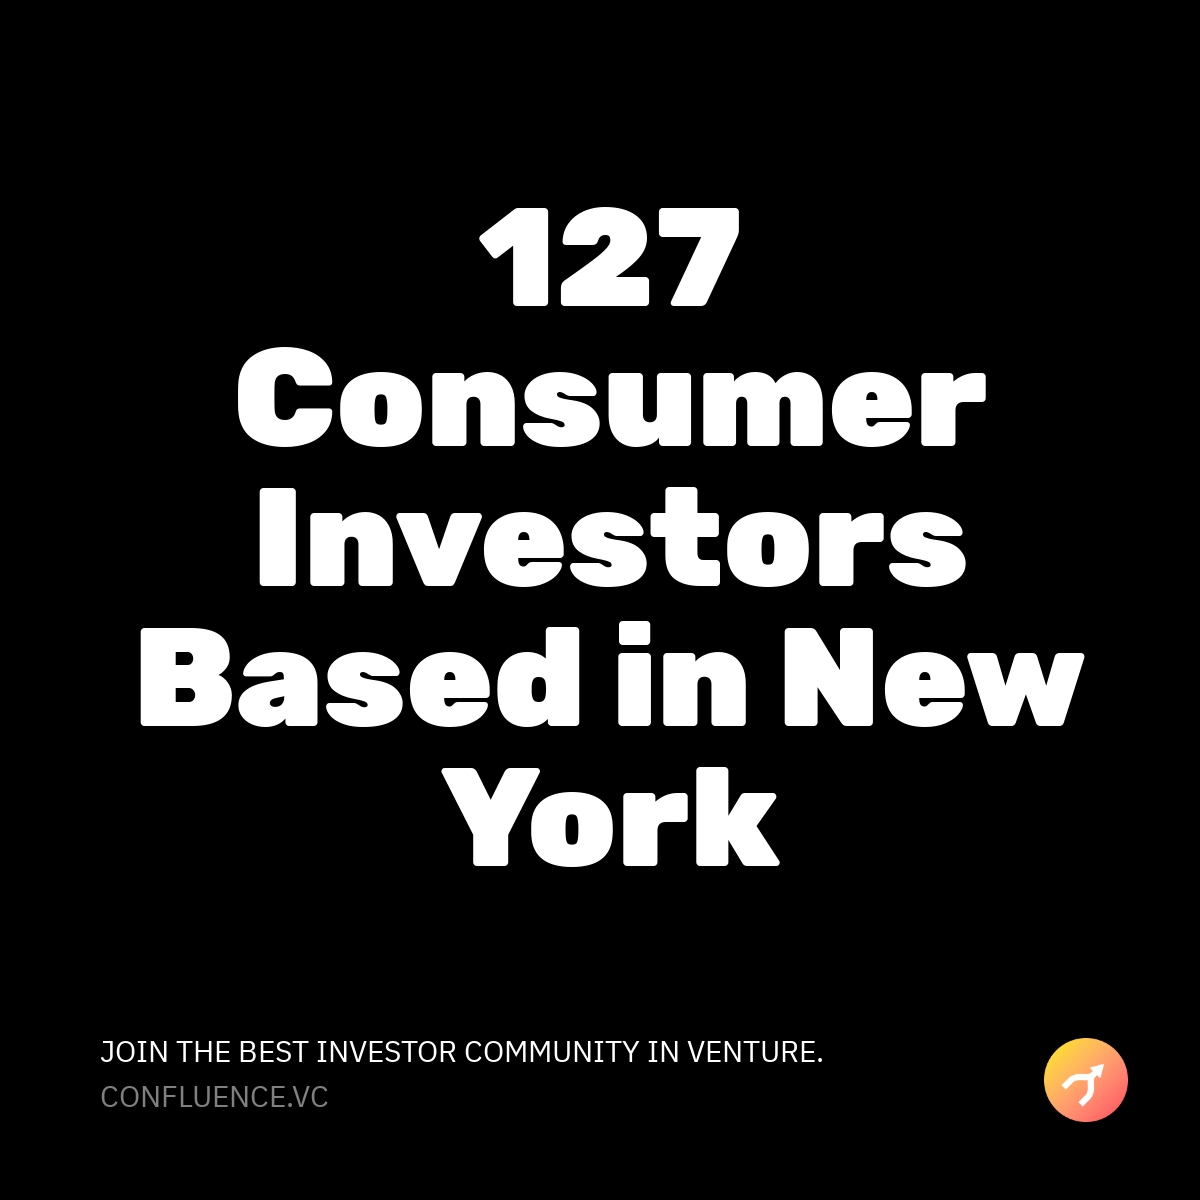 127 Consumer Investors Based In New York 